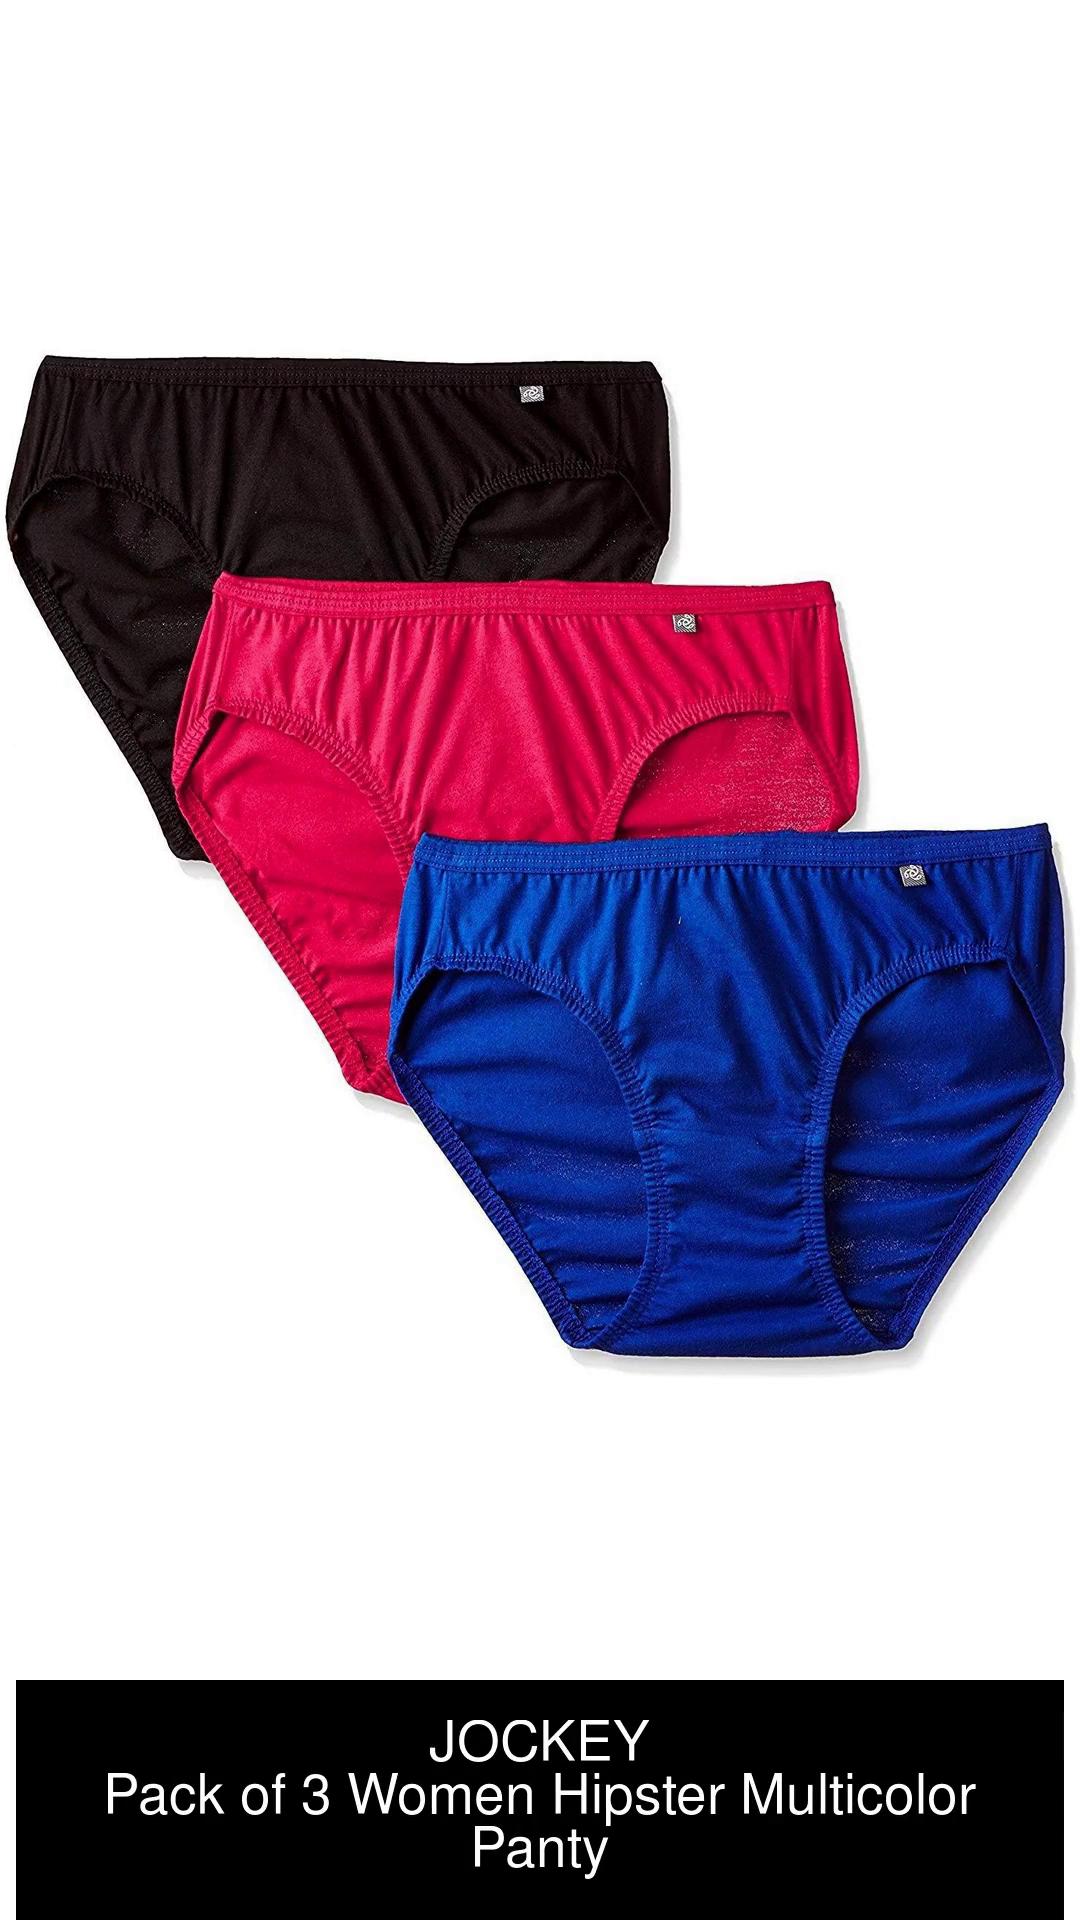 JOCKEY Women Bikini Multicolor Panty - Buy JOCKEY Women Bikini